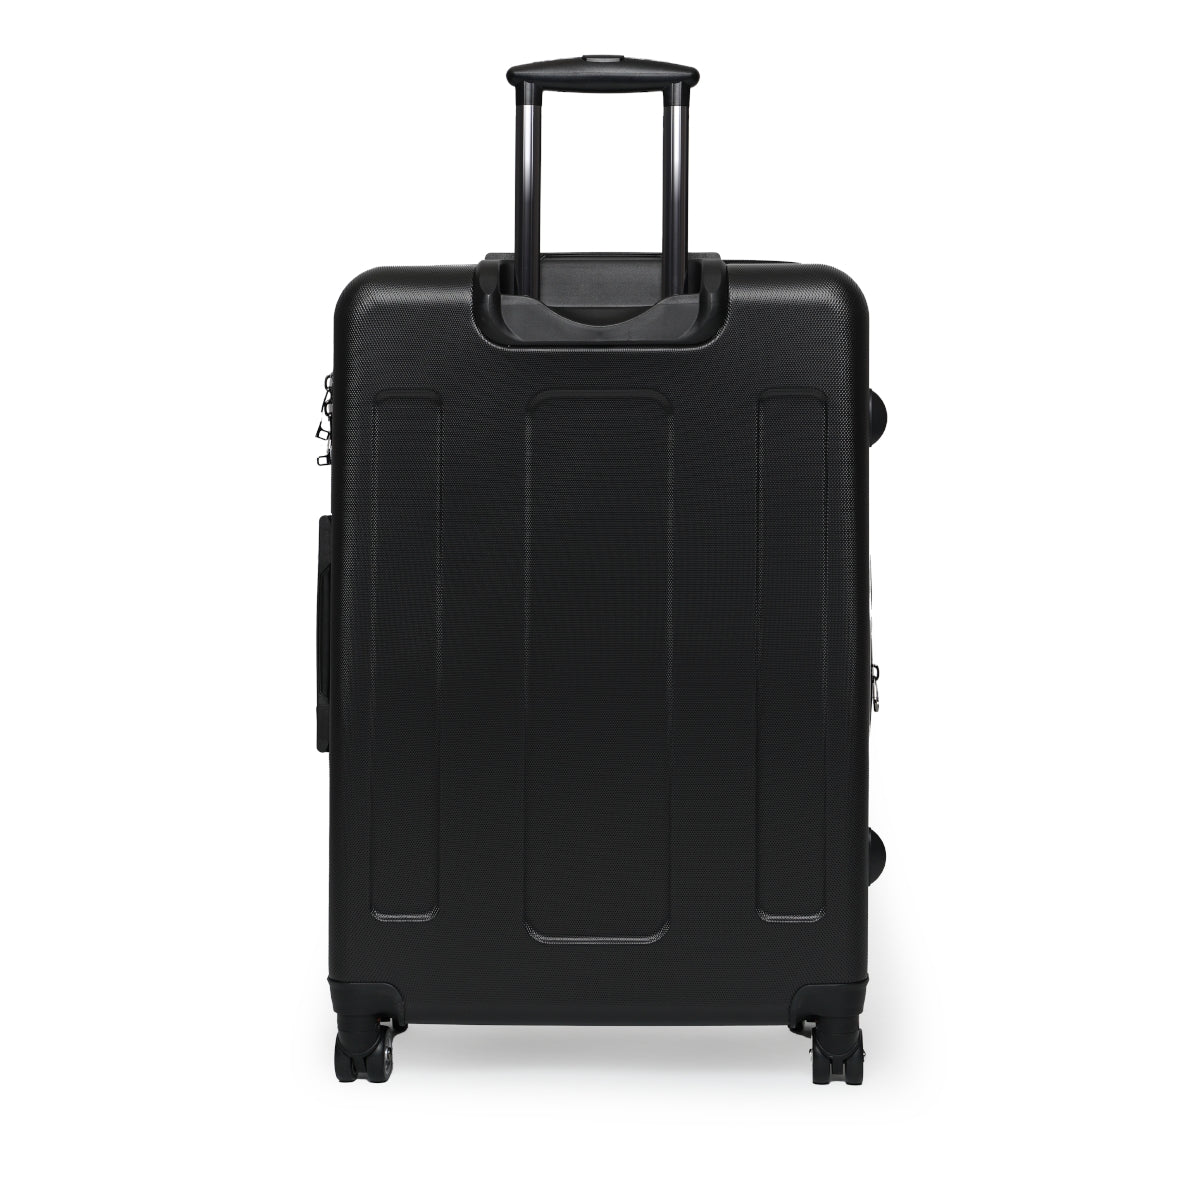 LEATHERTONE [BROWN] Suitcases | CANAANWEAR | Luggage | LEATHERTONE [BROWN]